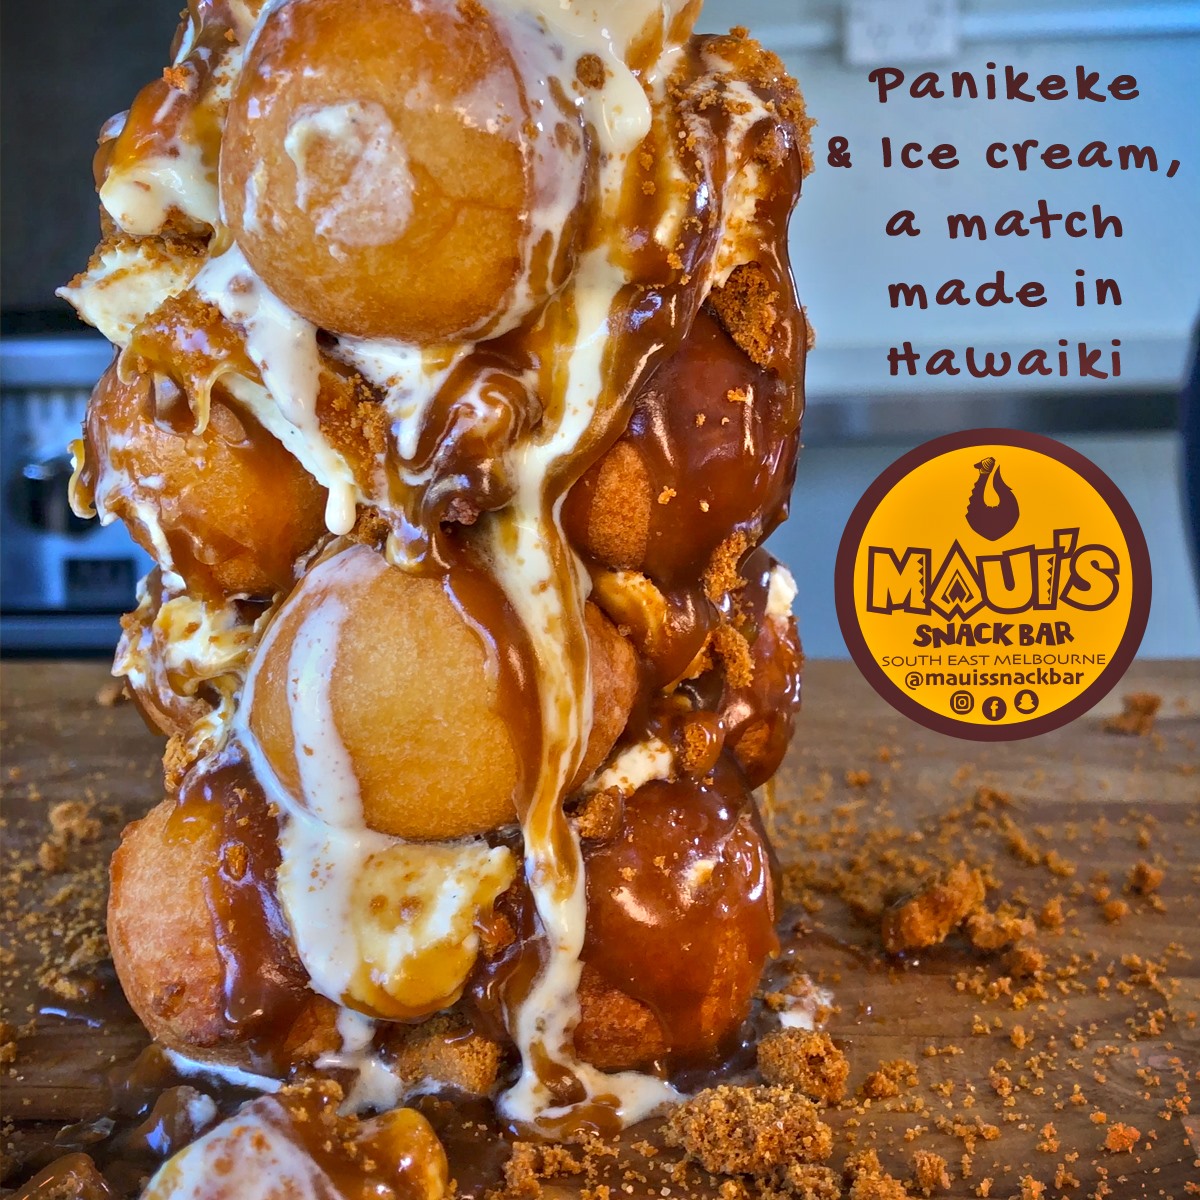 Maui’s Snack Bar